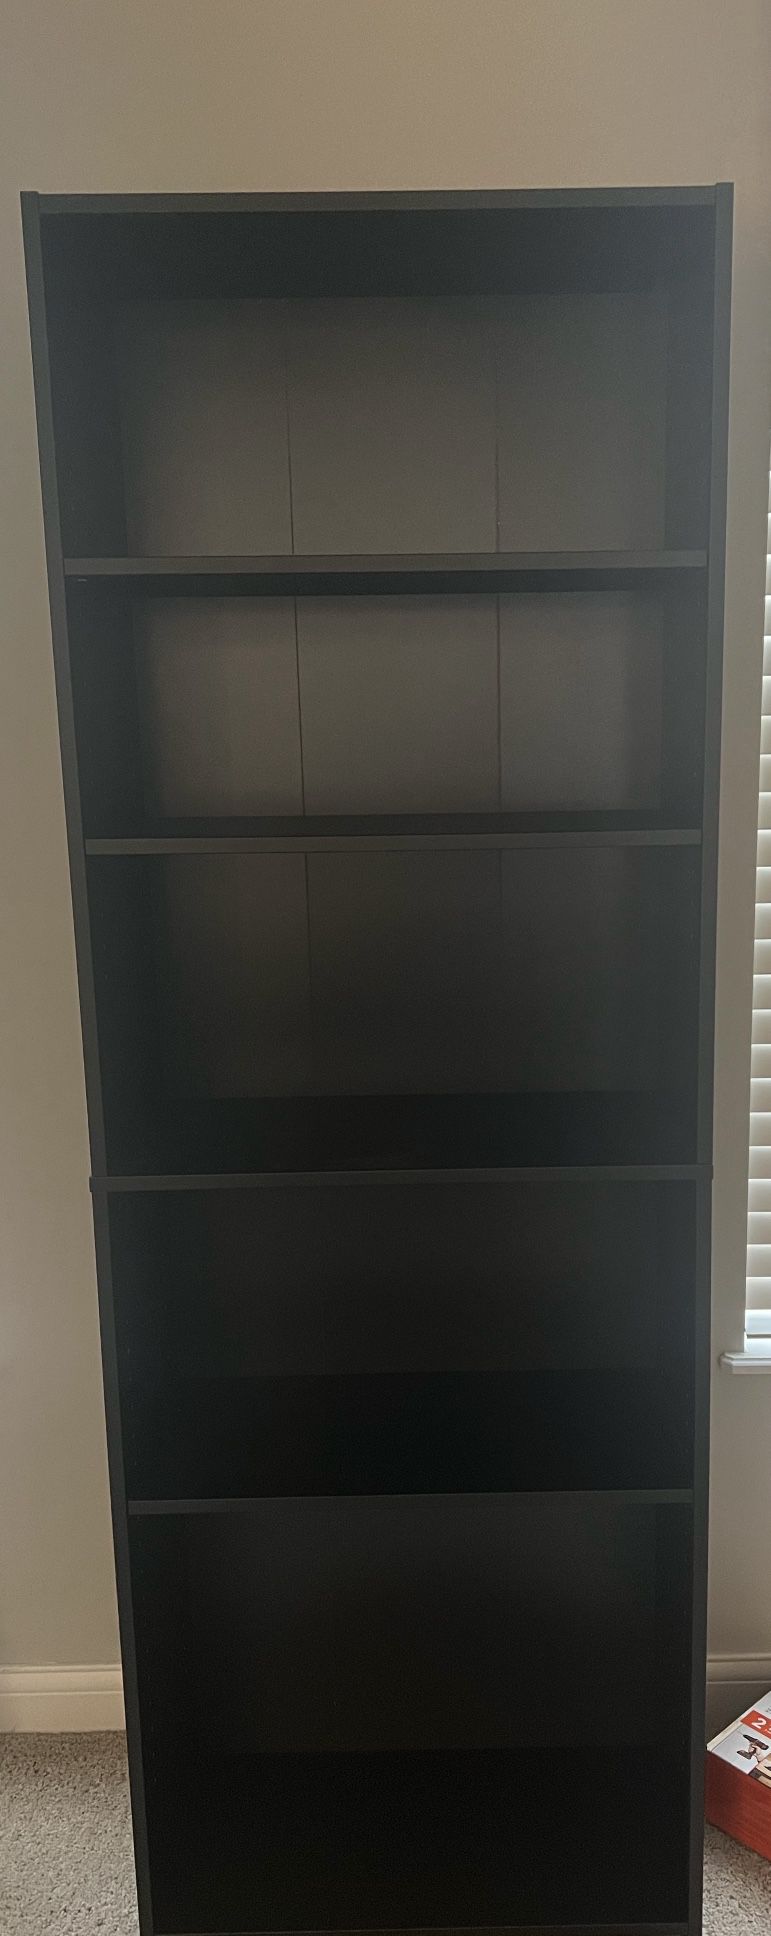 5 Tier Bookshelf 